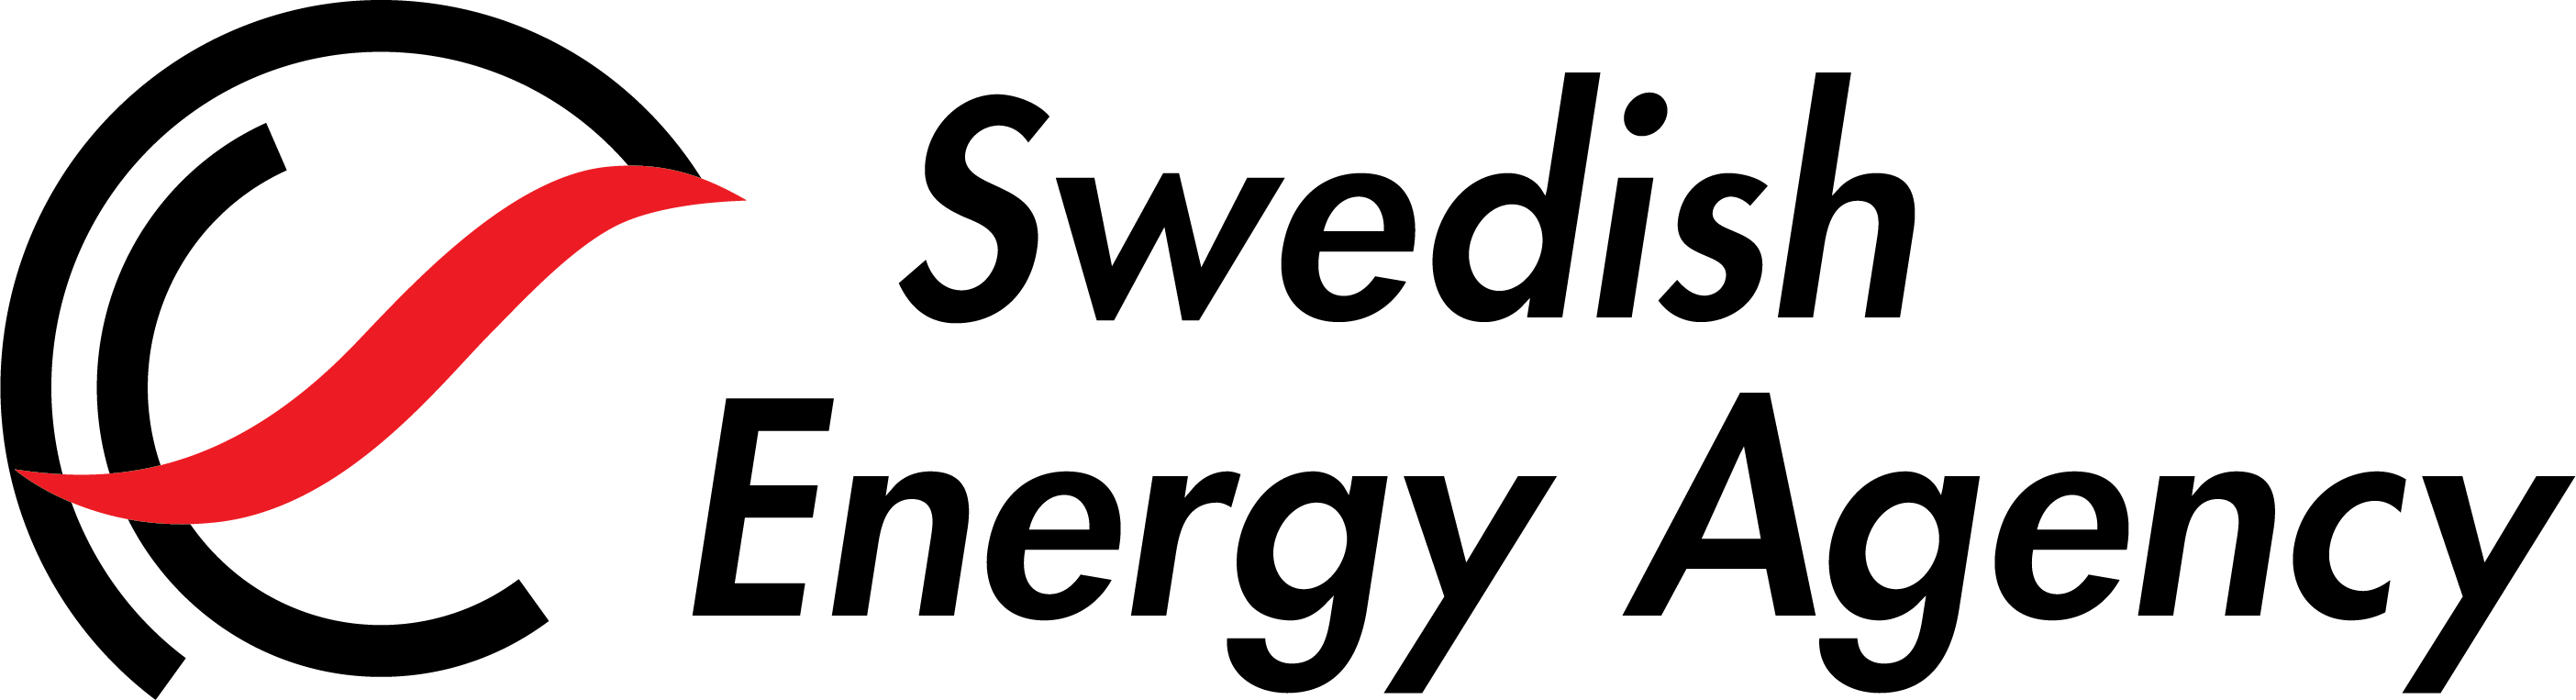 Swedish Energy Agency Logo Transparent